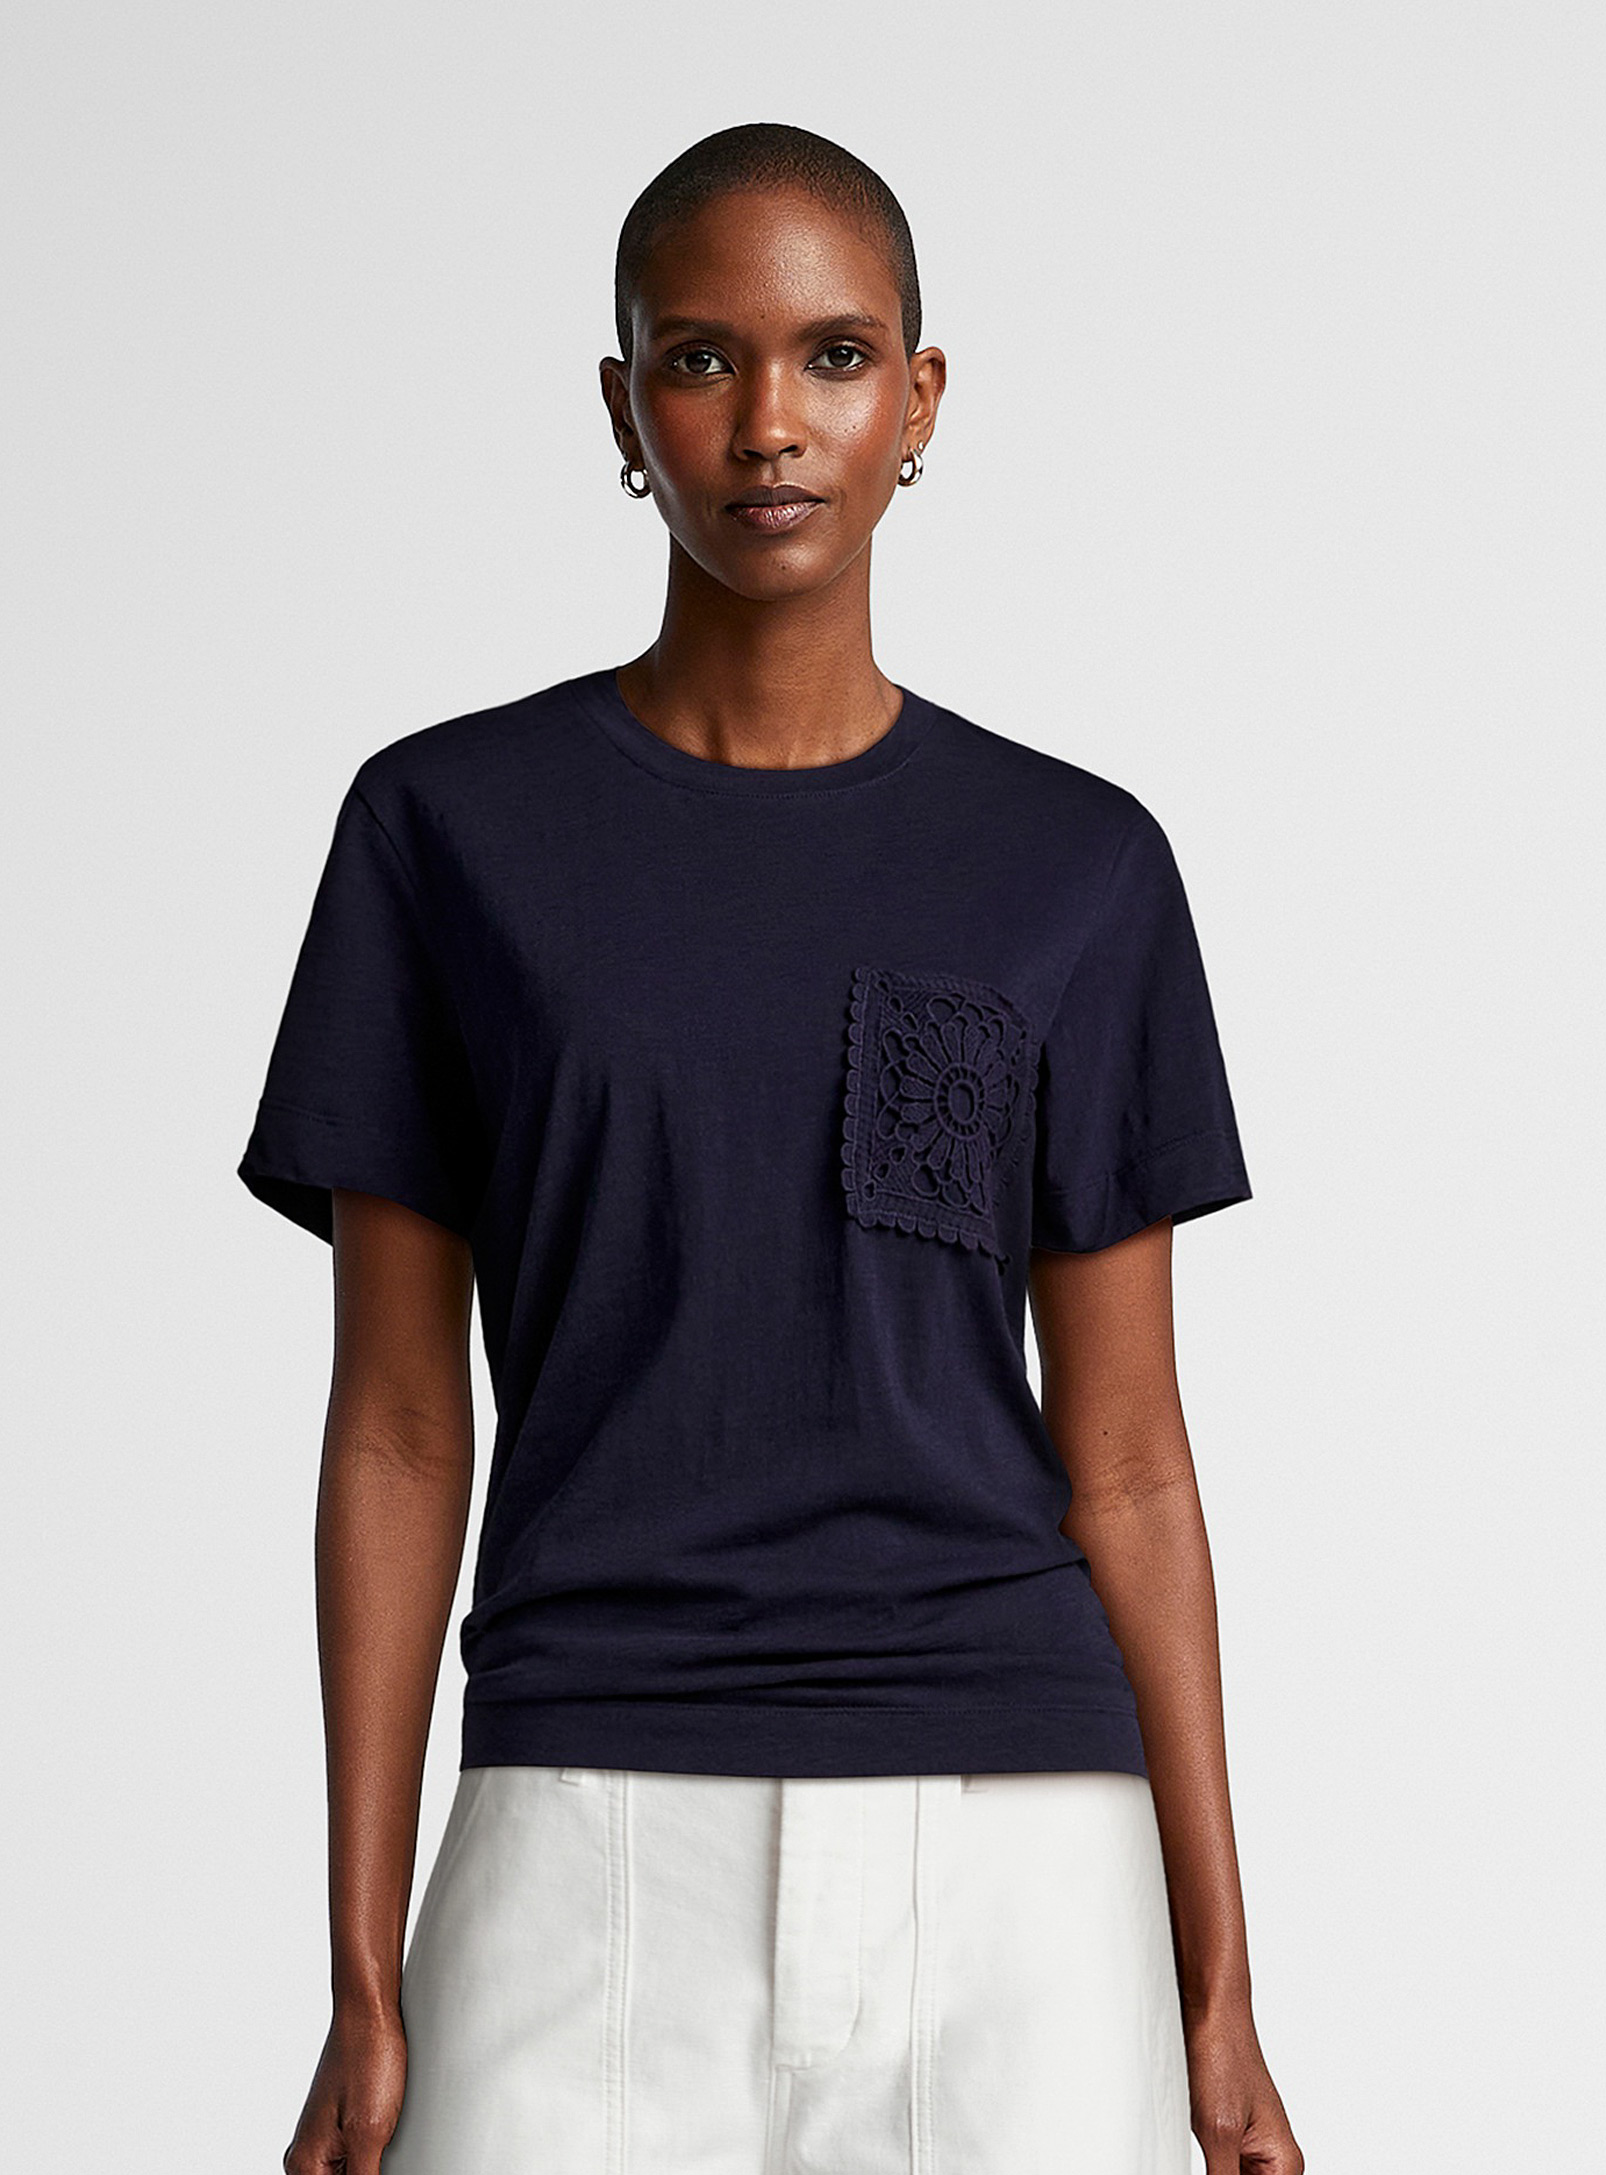 Contemporaine Crocheted Pocket T-shirt In Navy/midnight Blue